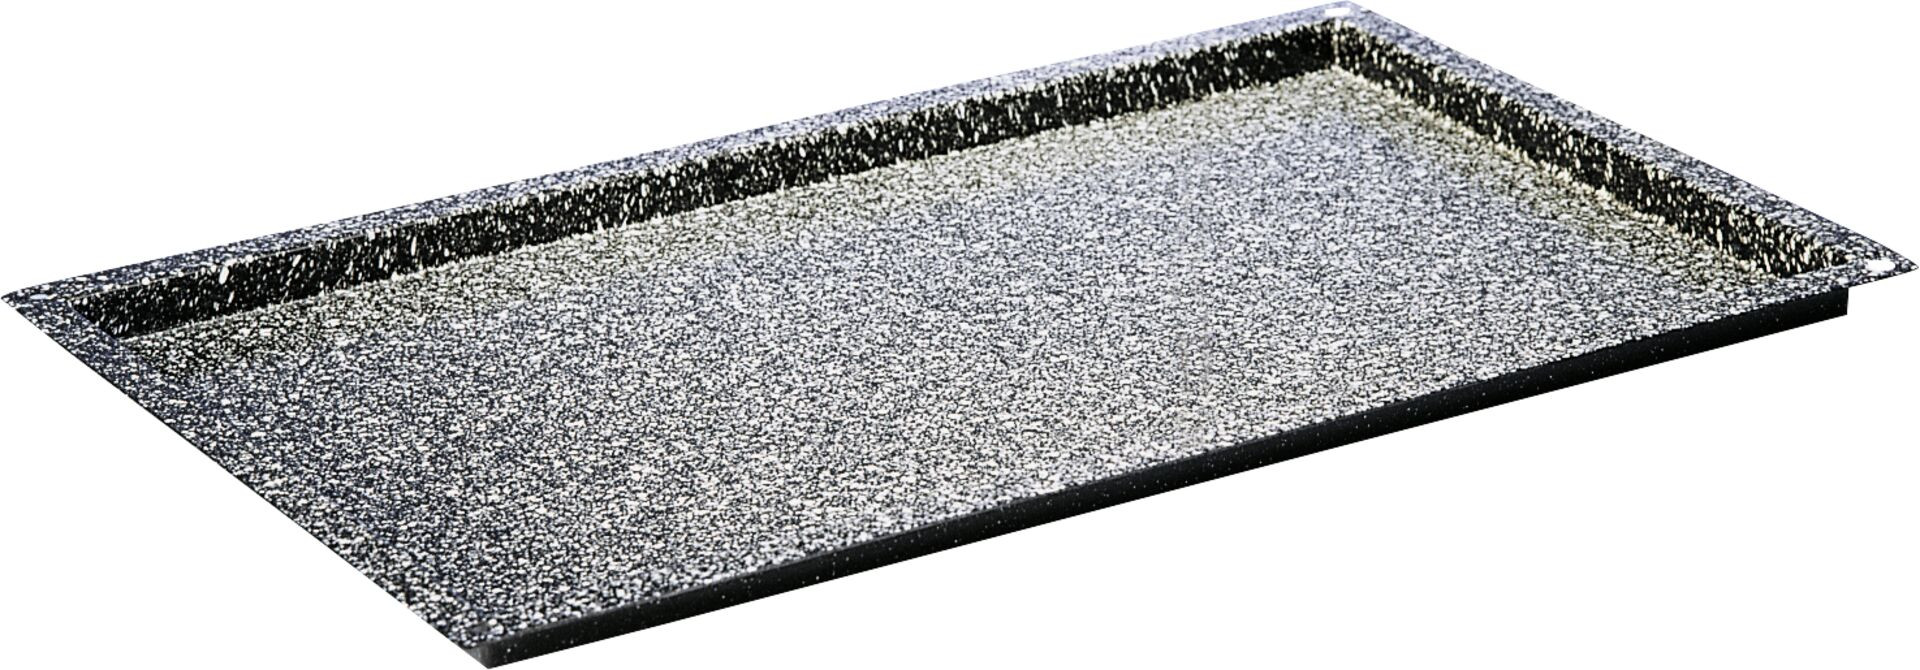 Konvektomatenblech GN 2/3 Granit-Emaille 4 cm